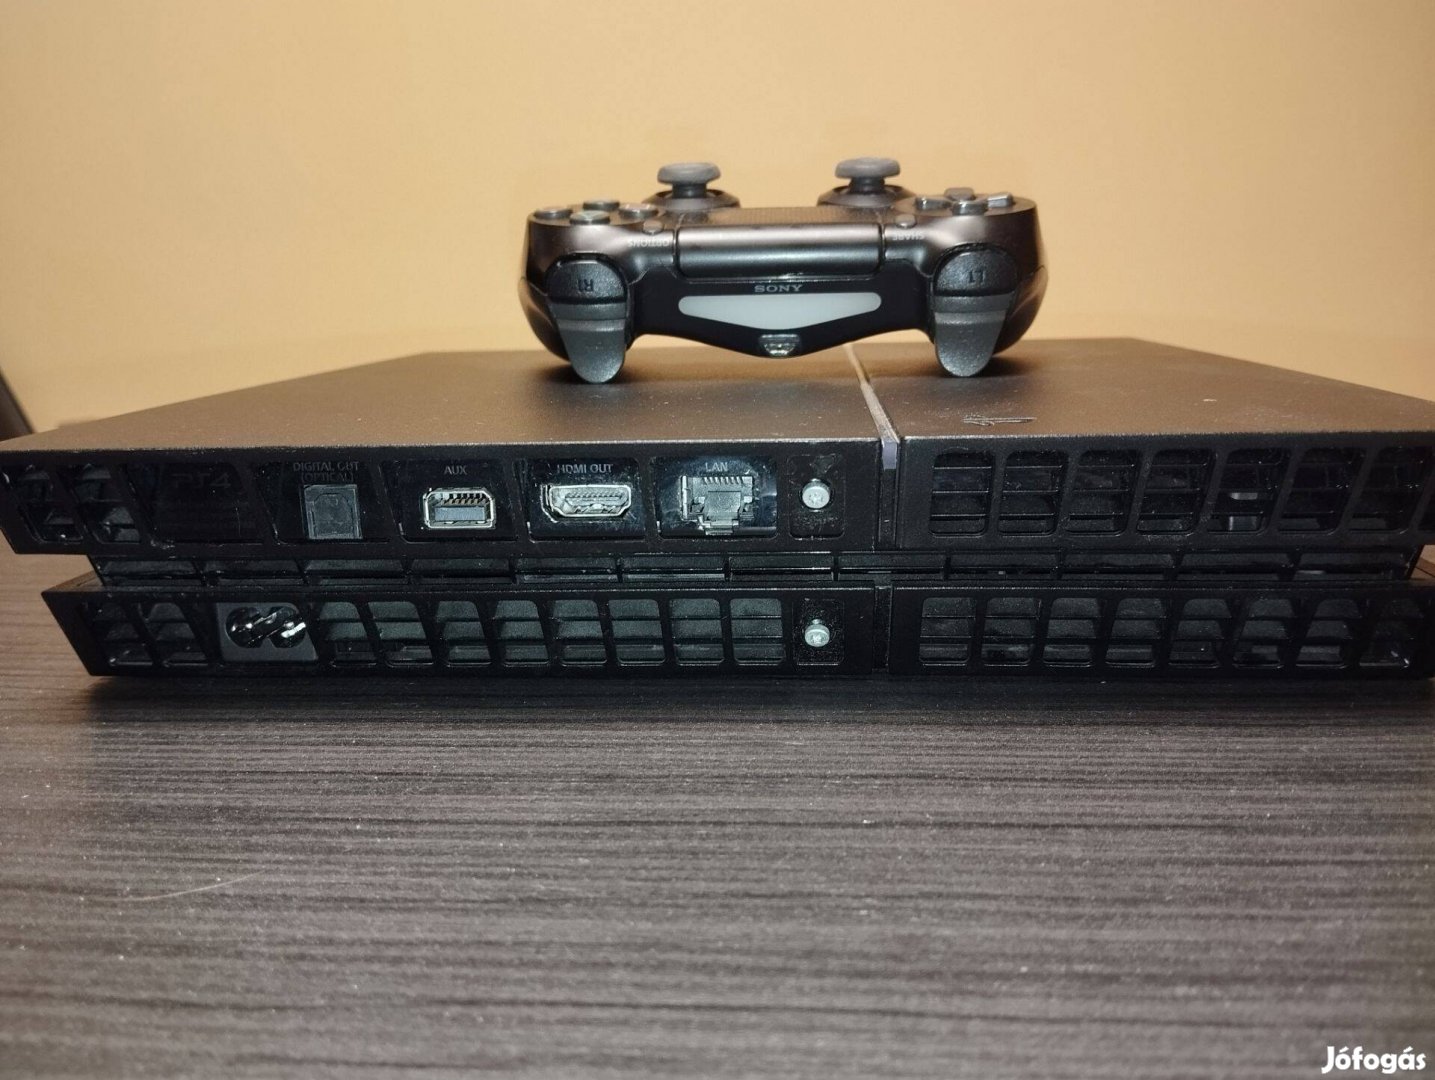 PS4 500MB + 1db controller, HDMI